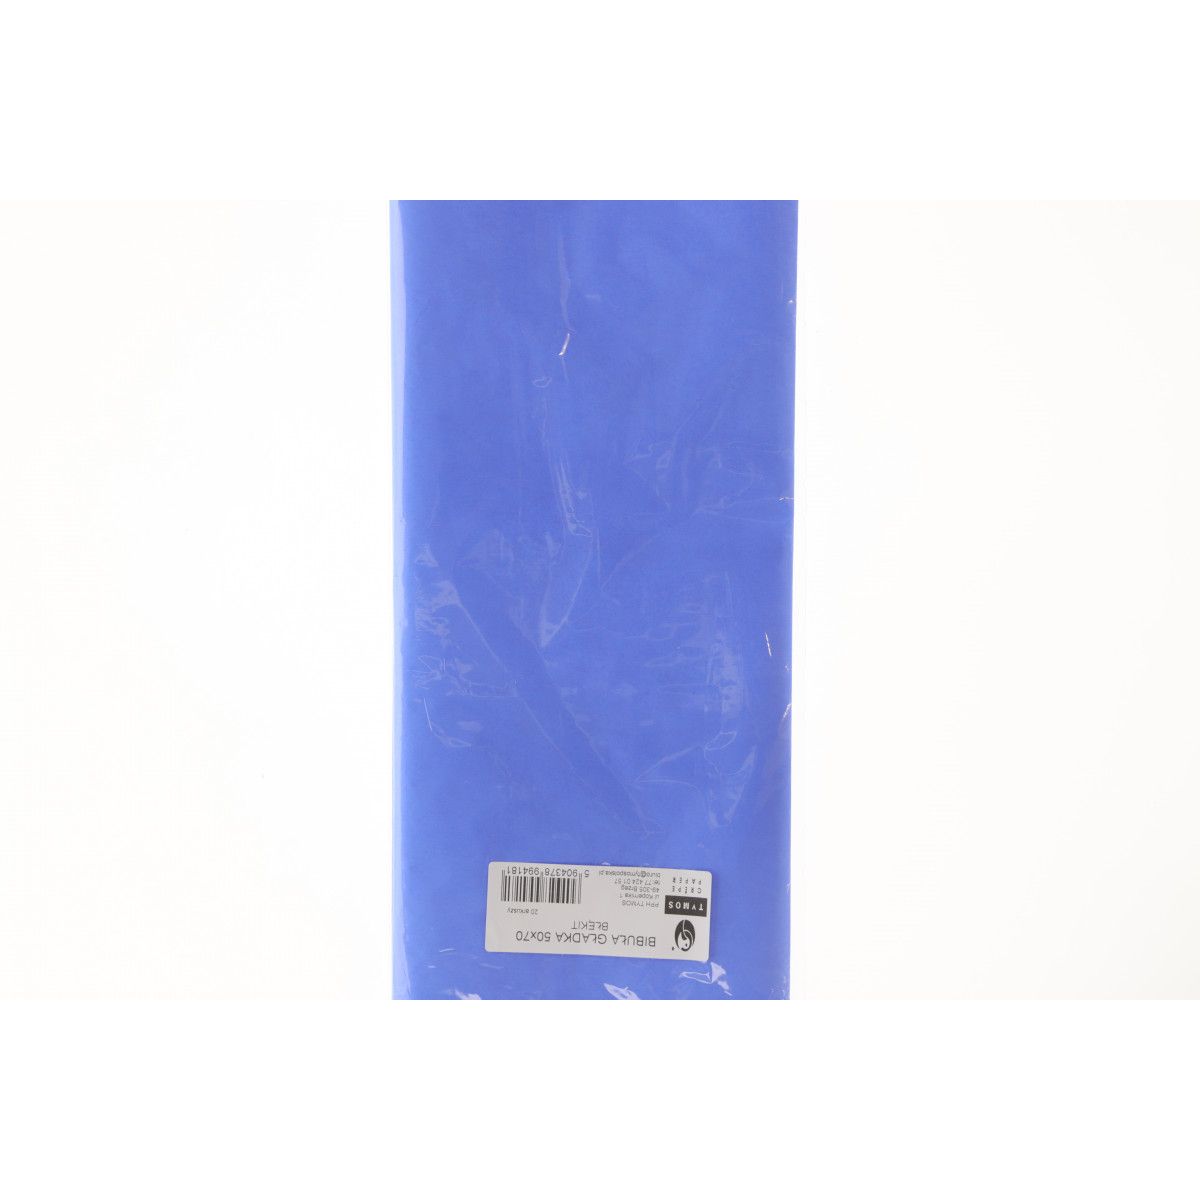 Bibuła gładka błękitna gładka niebieska 700mm x 500mm (18)